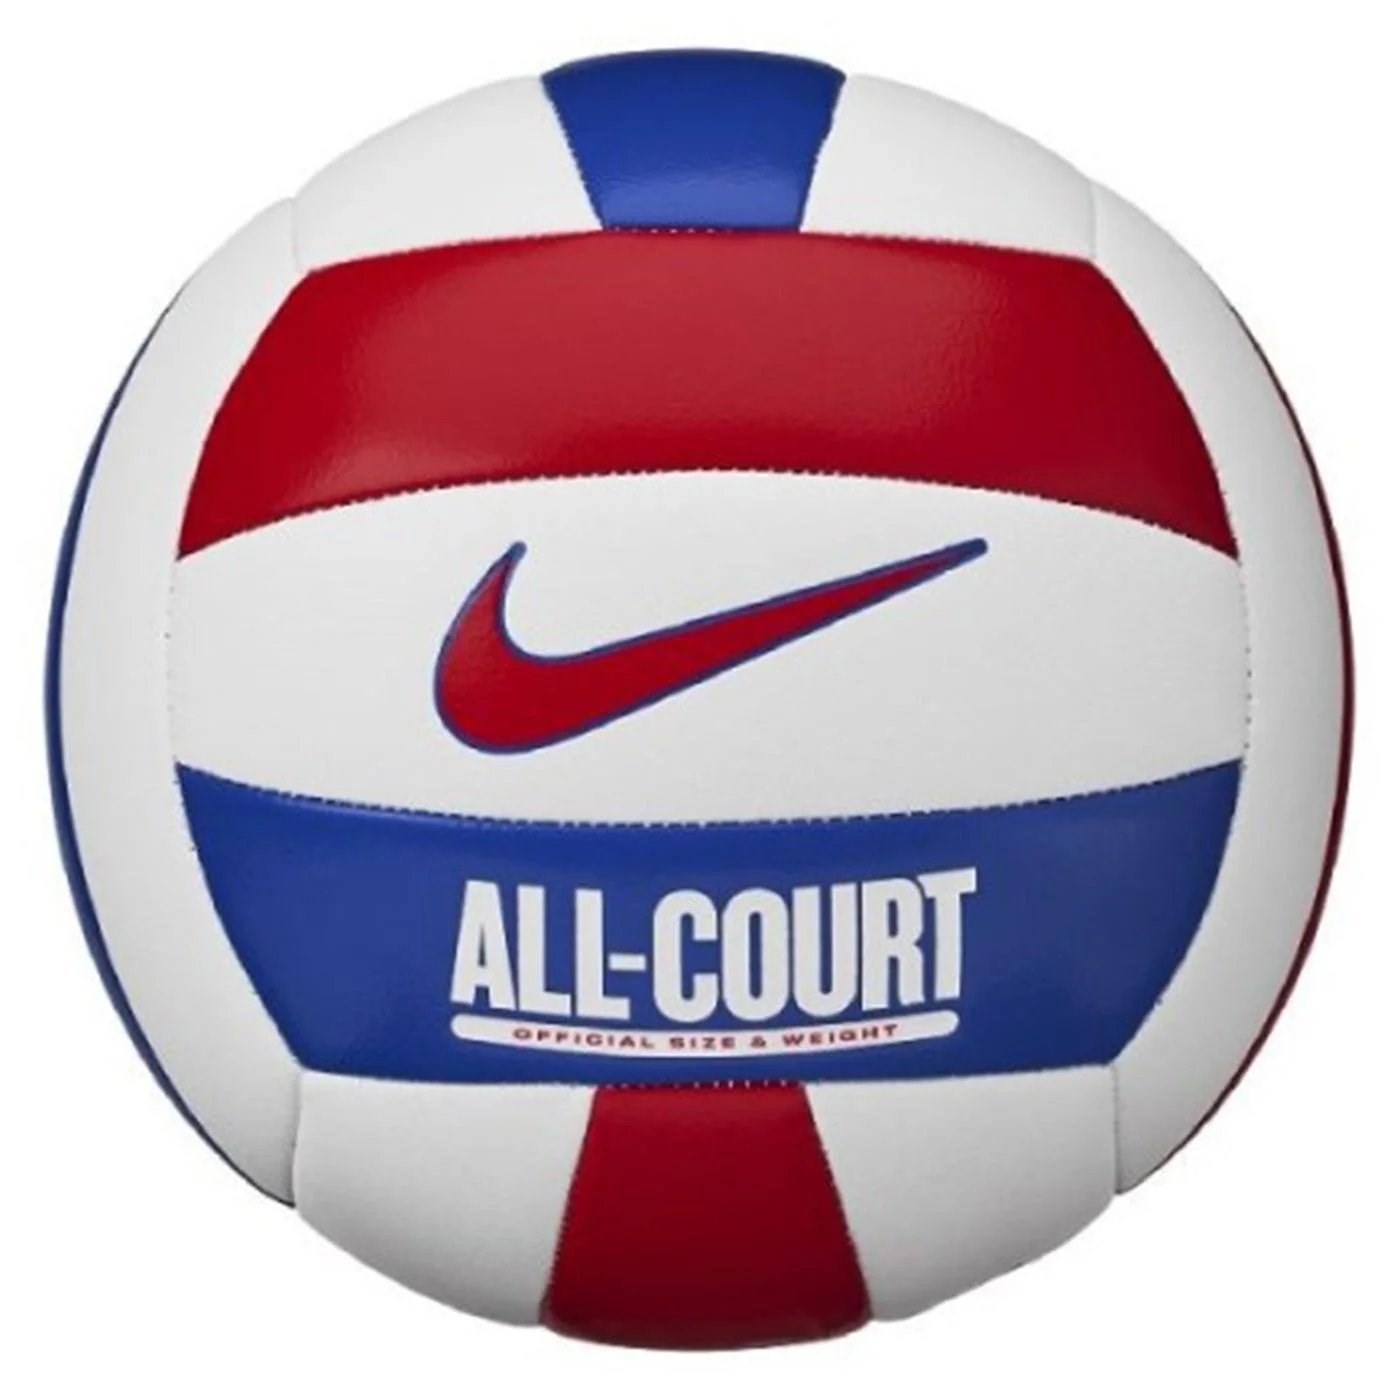 Nike All Court Volleyball Deflated Voleybol Topu Beyaz